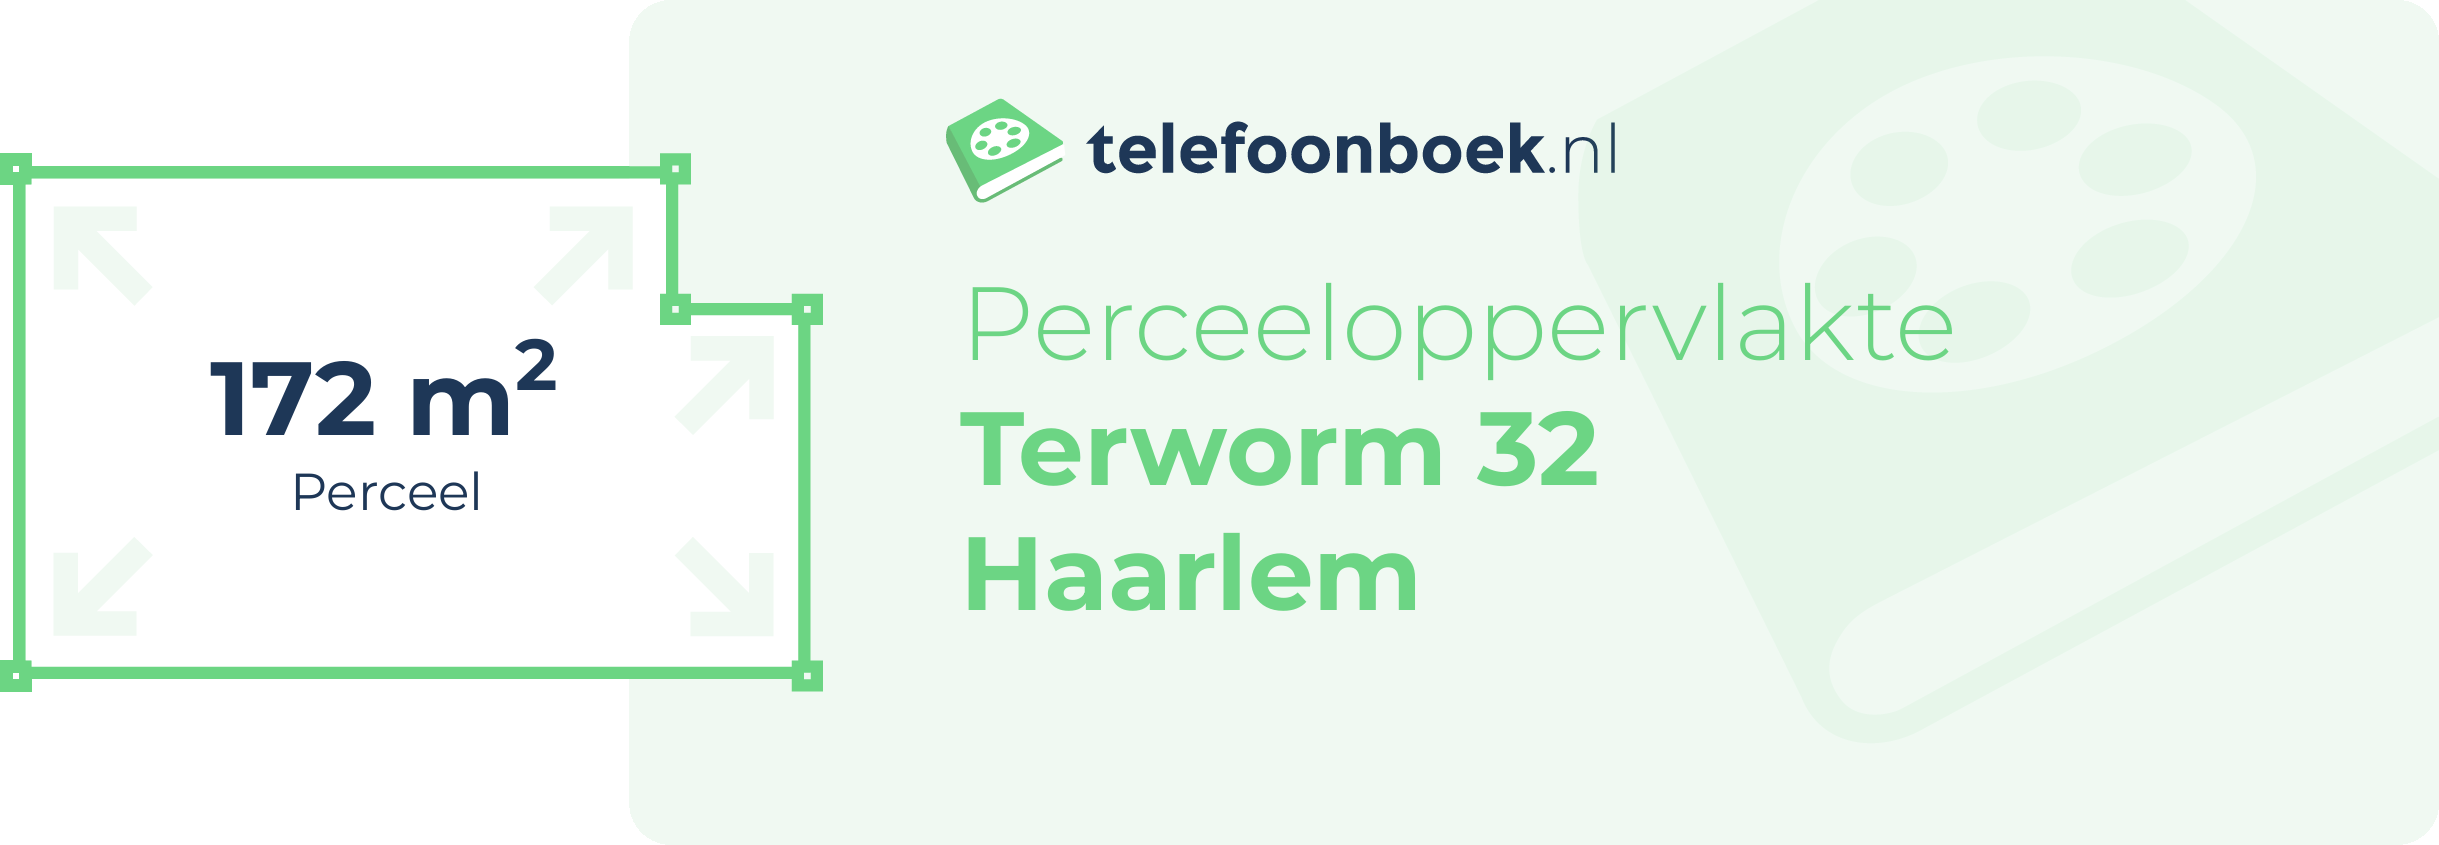 Perceeloppervlakte Terworm 32 Haarlem